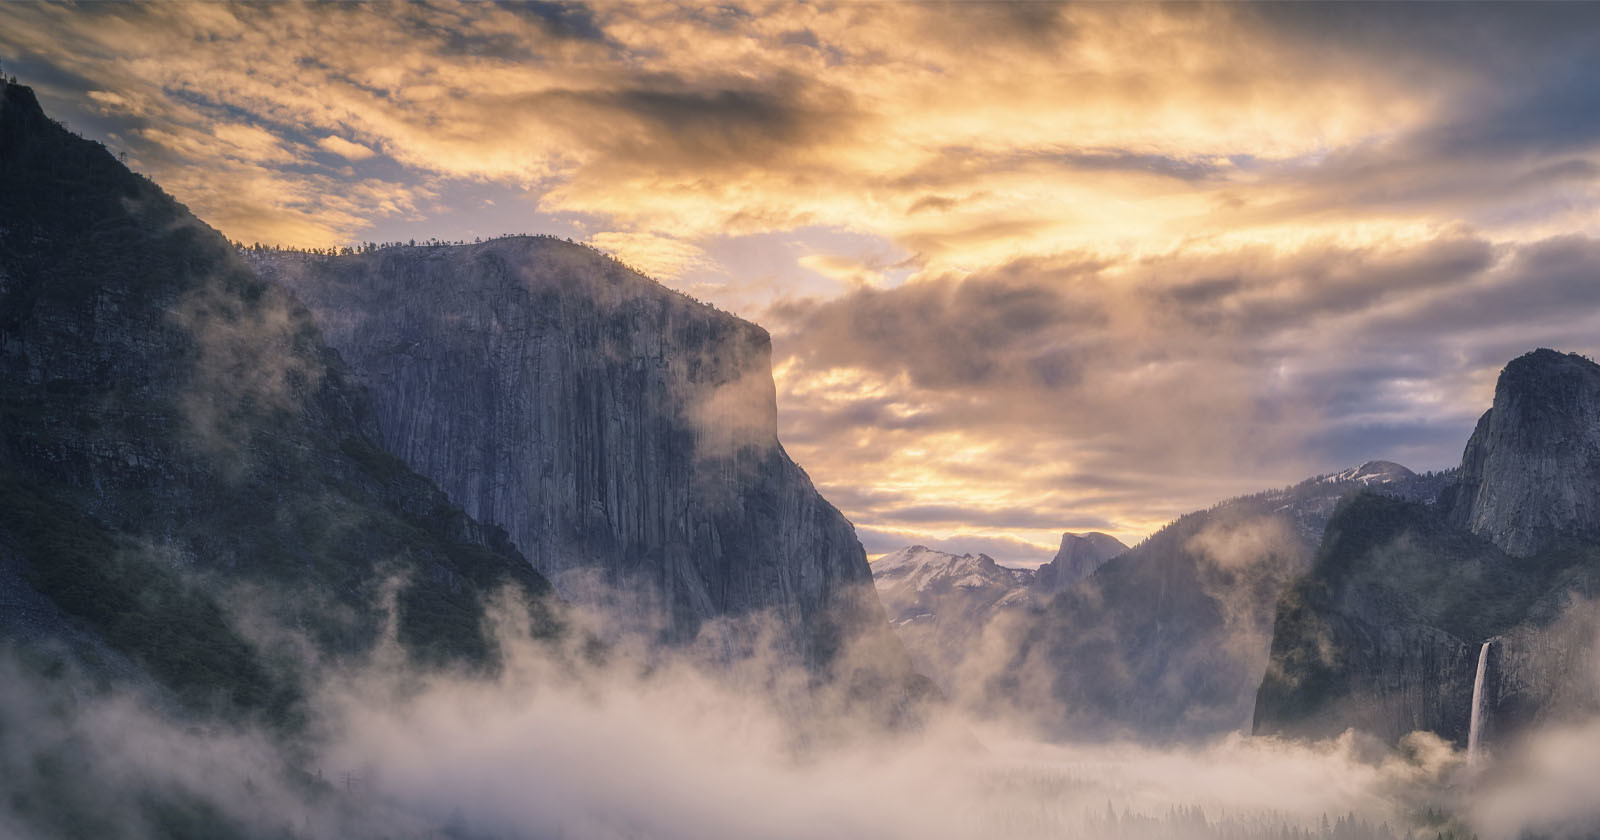 Videos Show Massive Rockfall at Yosemites El Capitan: It was Mad